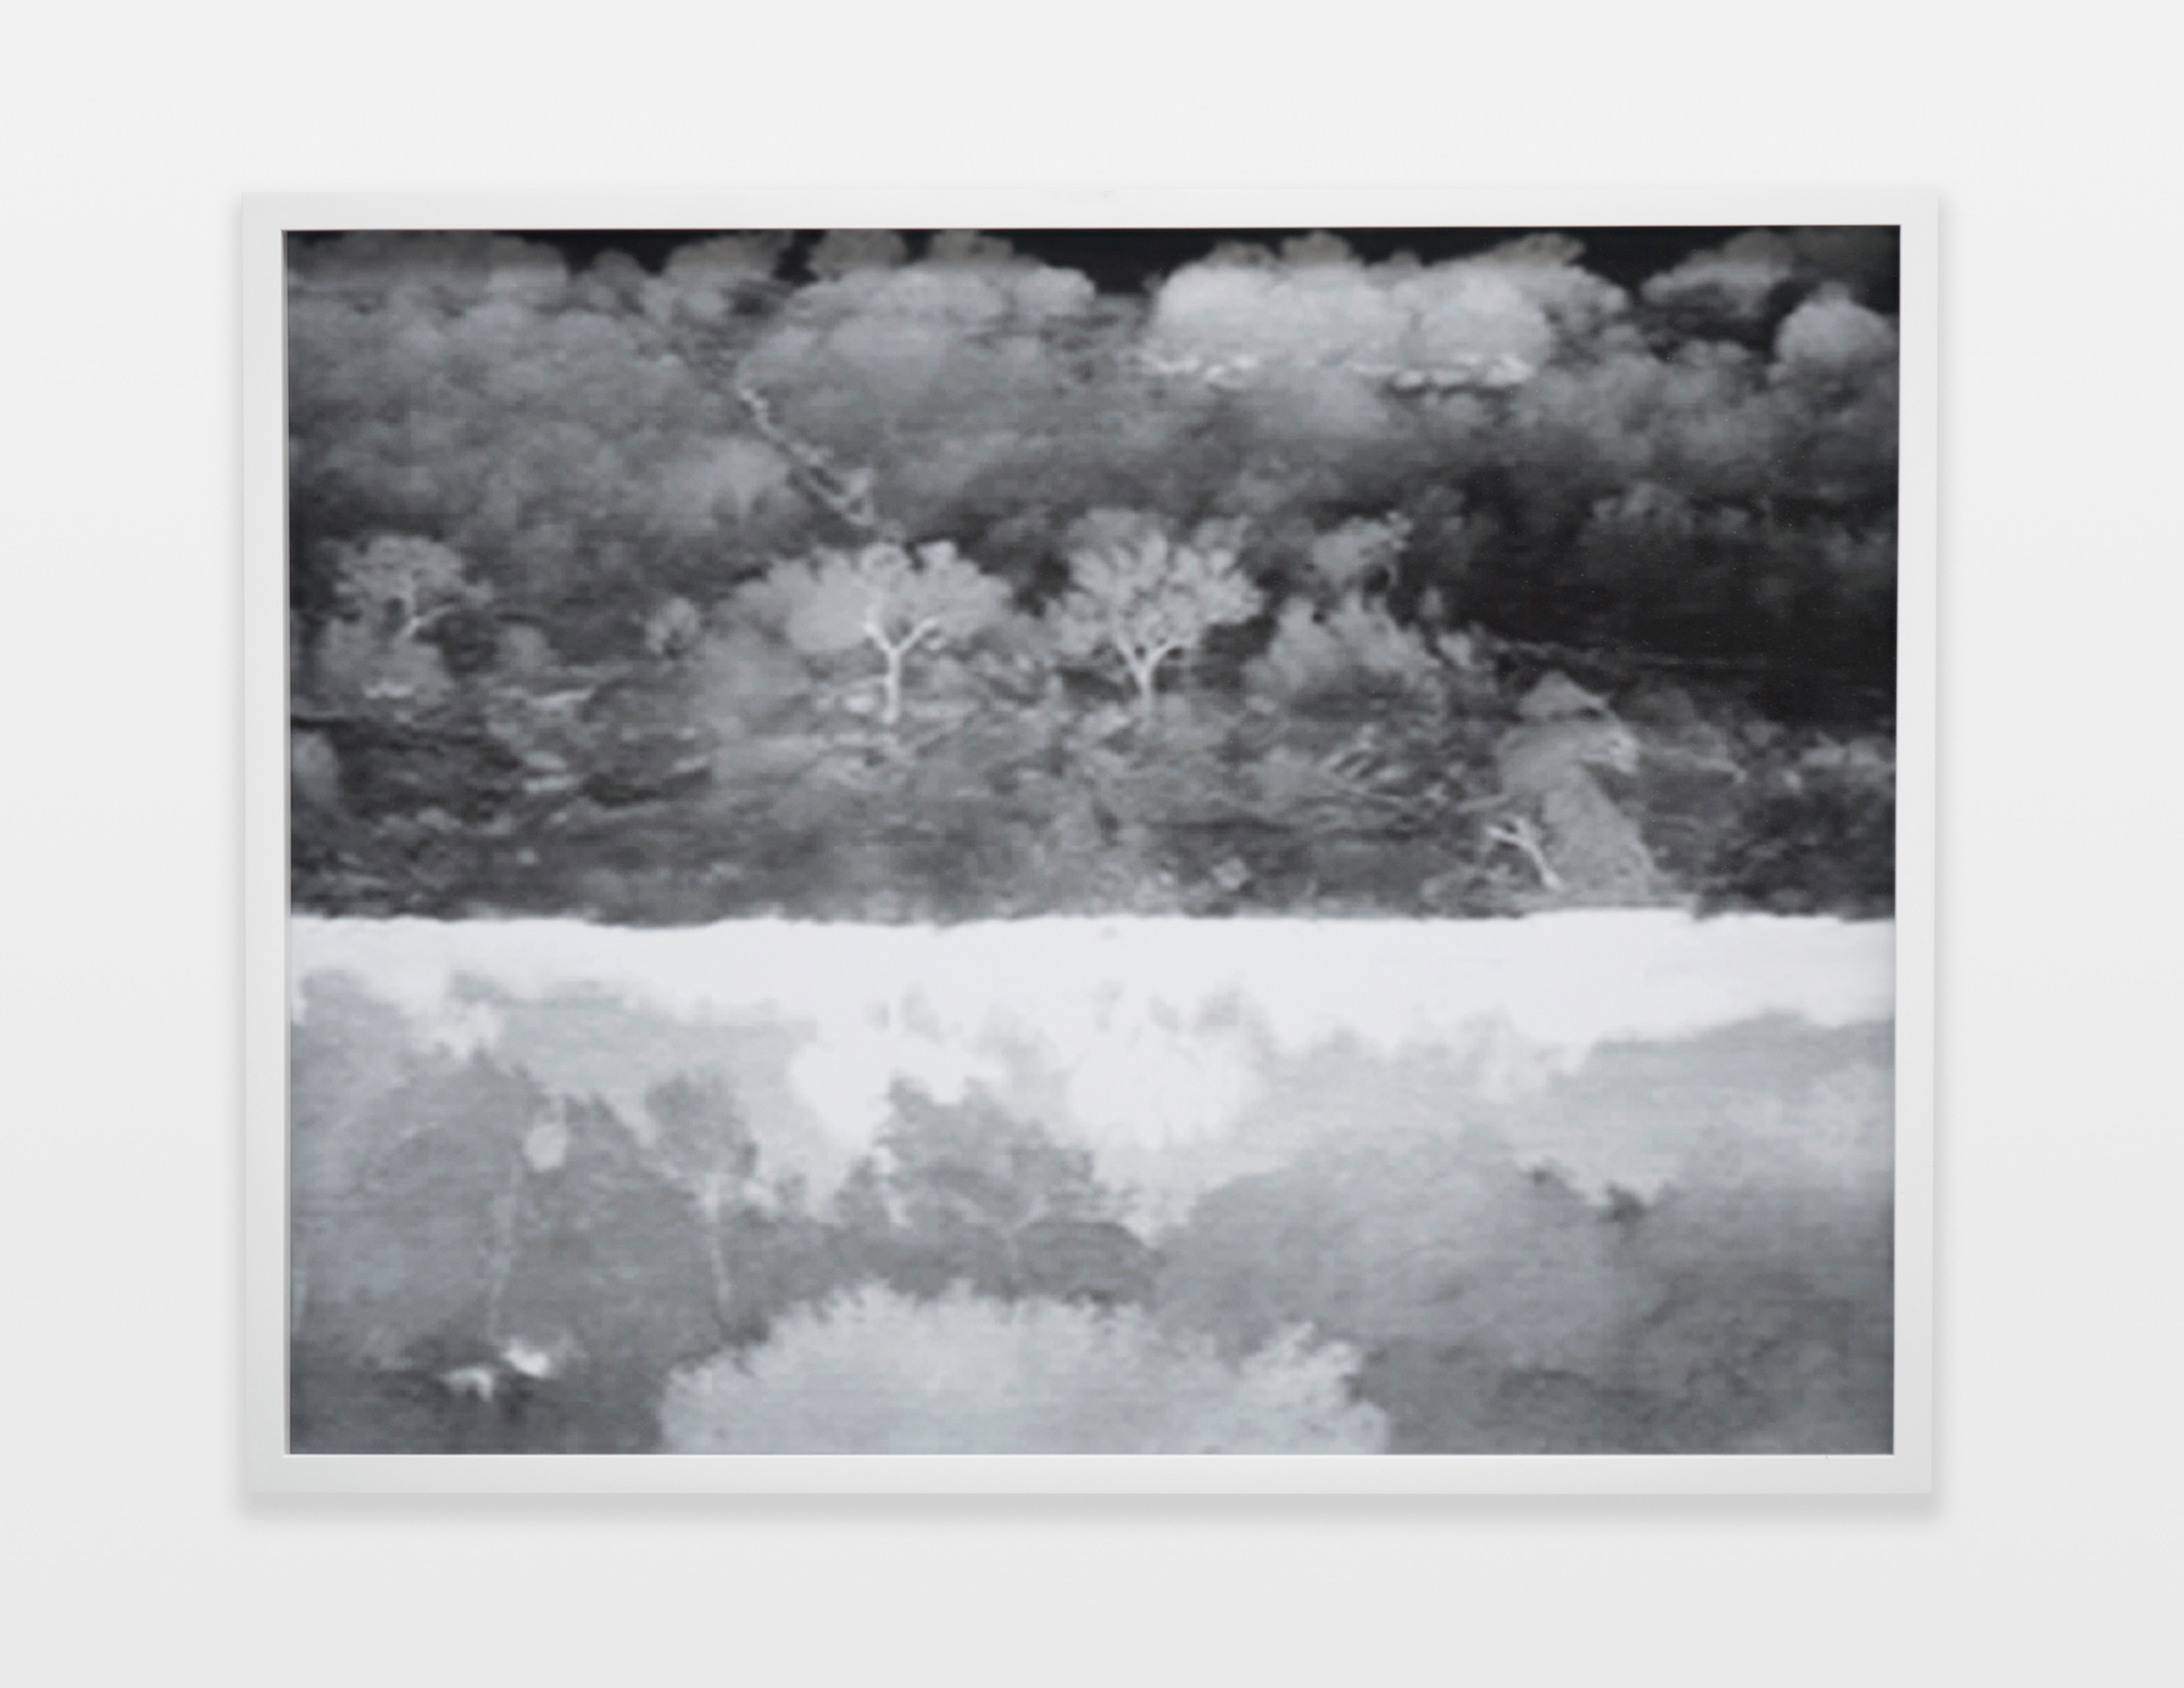 Barbara Ess, Reflection [Surveillance Series], 2011/2019, archival pigment print, 20h x 26.38w in.